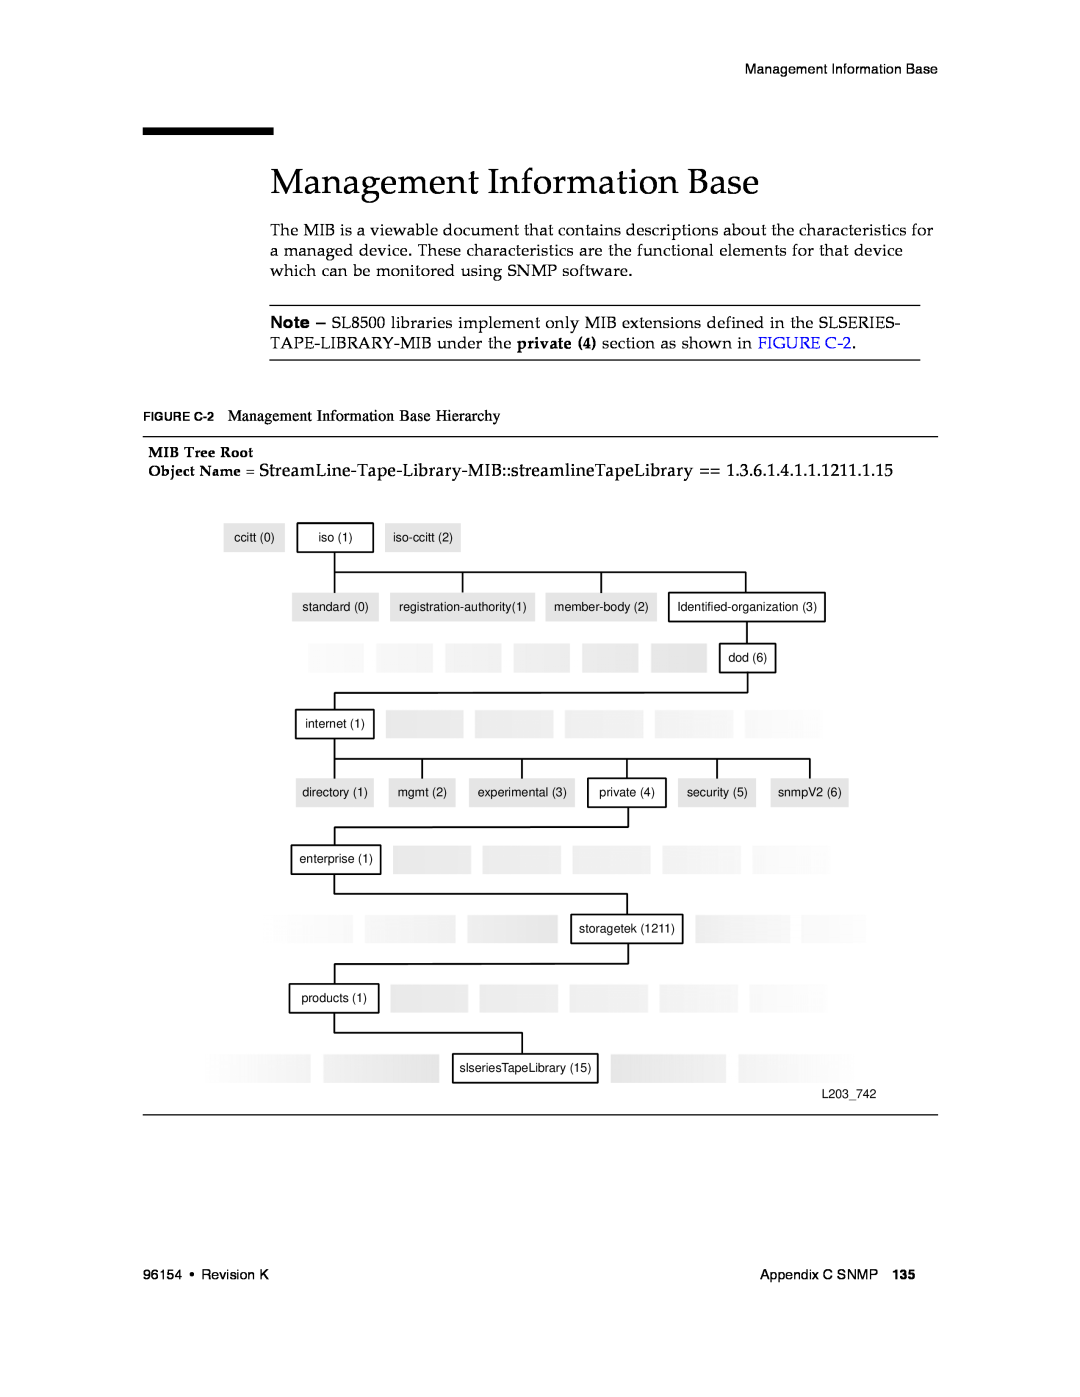 Sun Microsystems SL8500 manual Management Information Base 